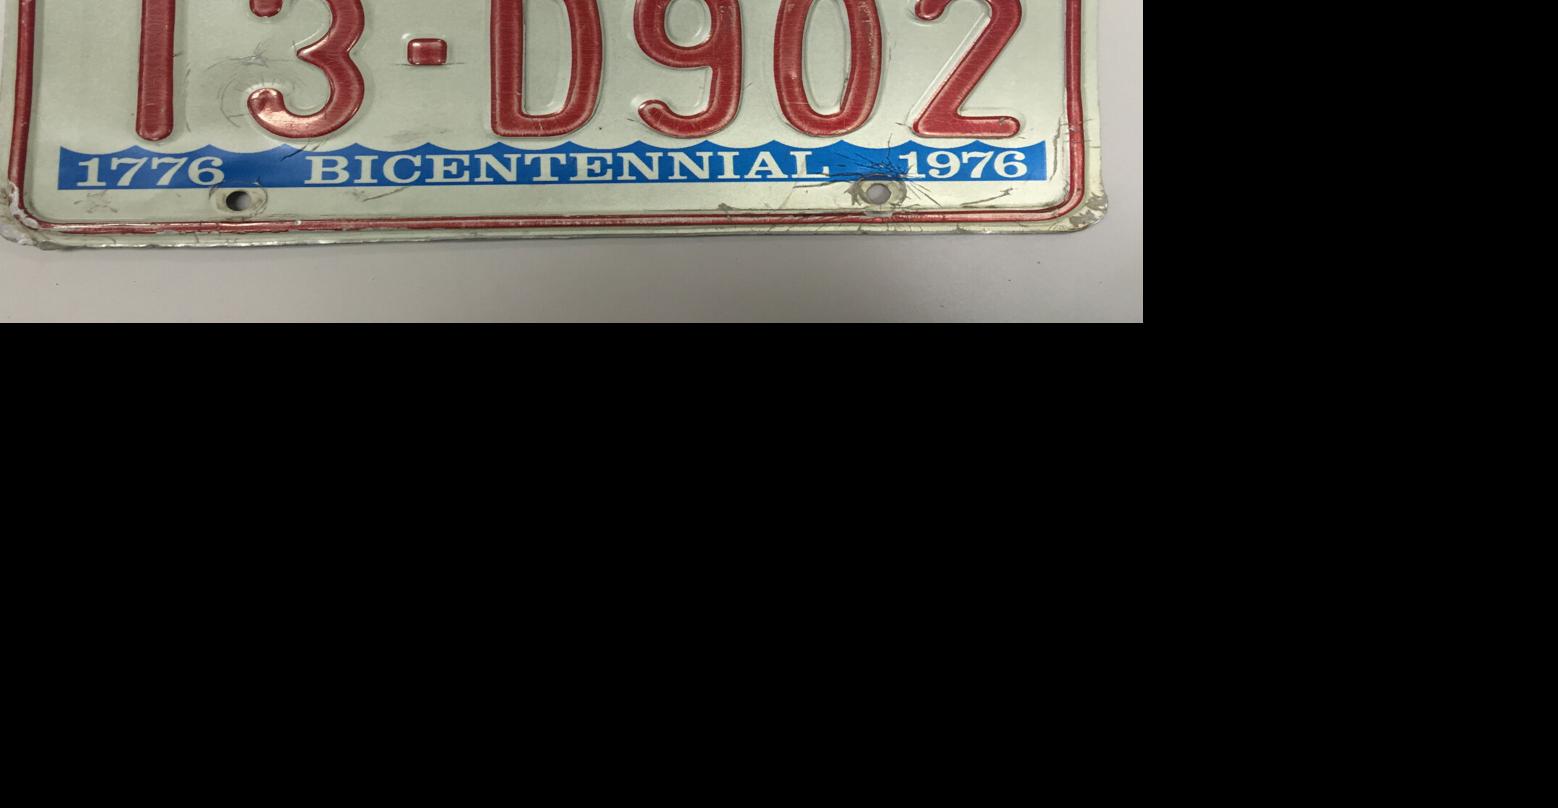 Nebraska's license plates through the years